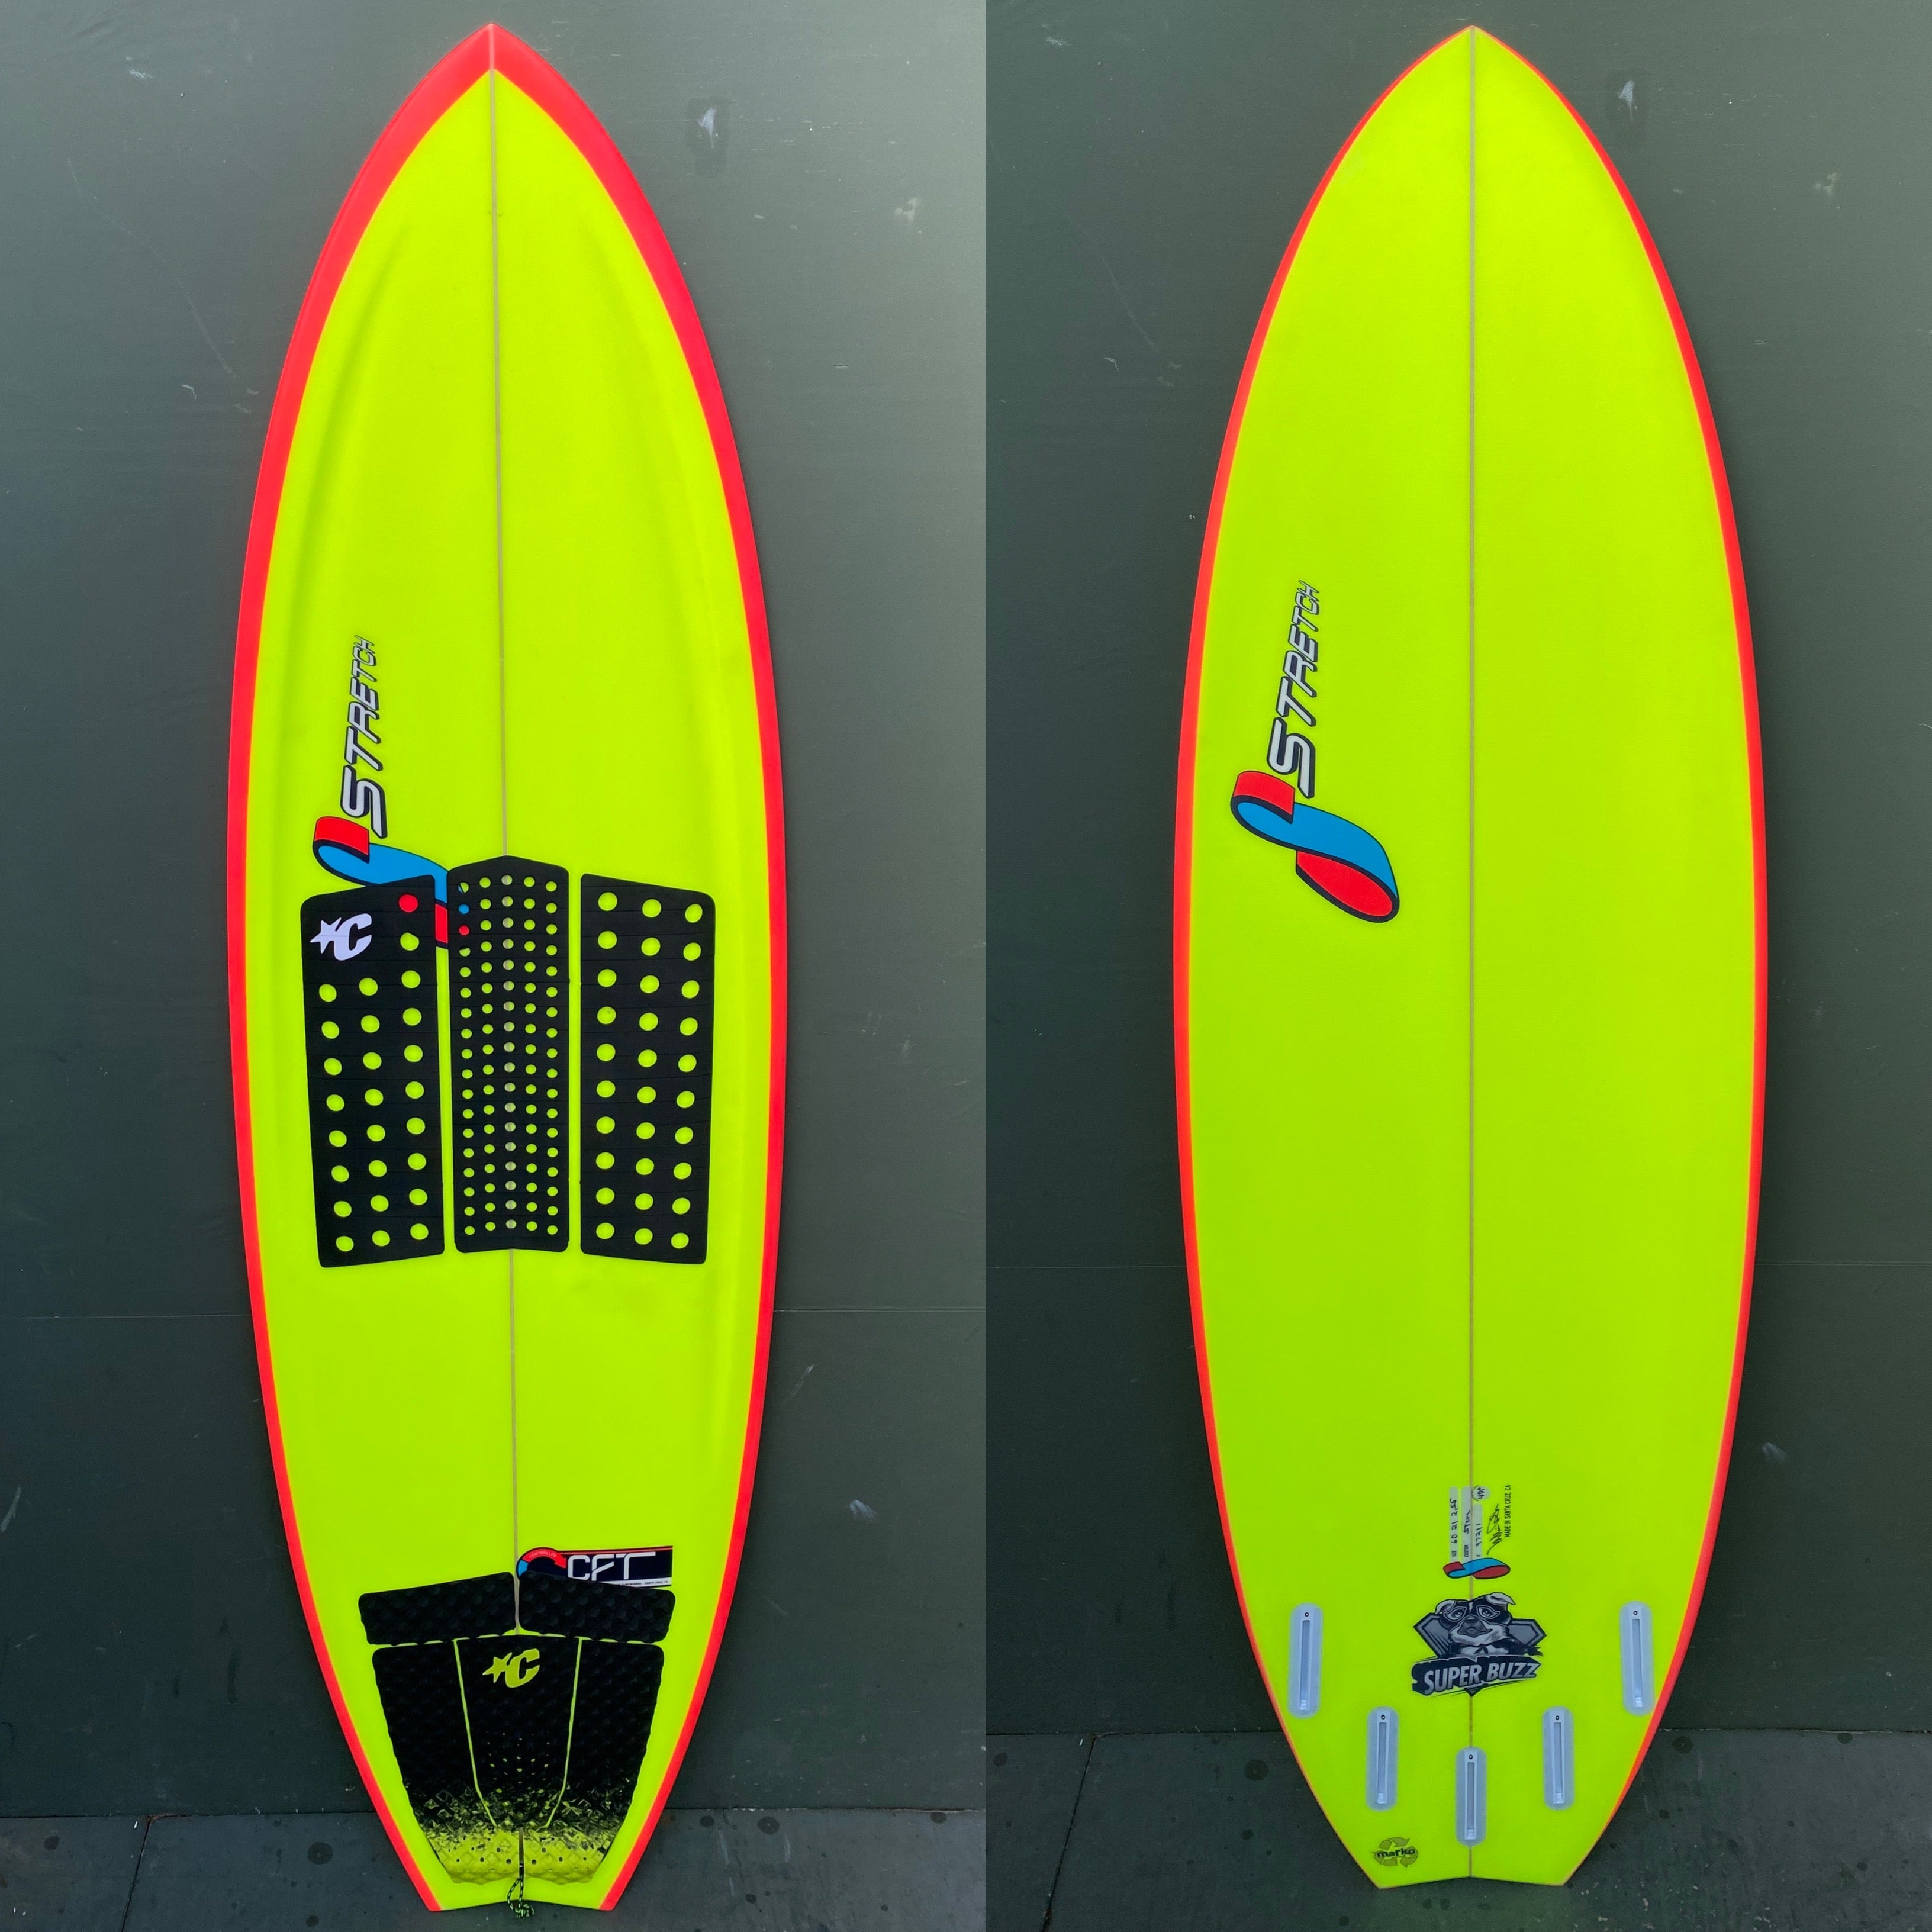 USED Stretch Surfboards - 6'0" Super Buzz Surfboard - Seaside Surf Shop 